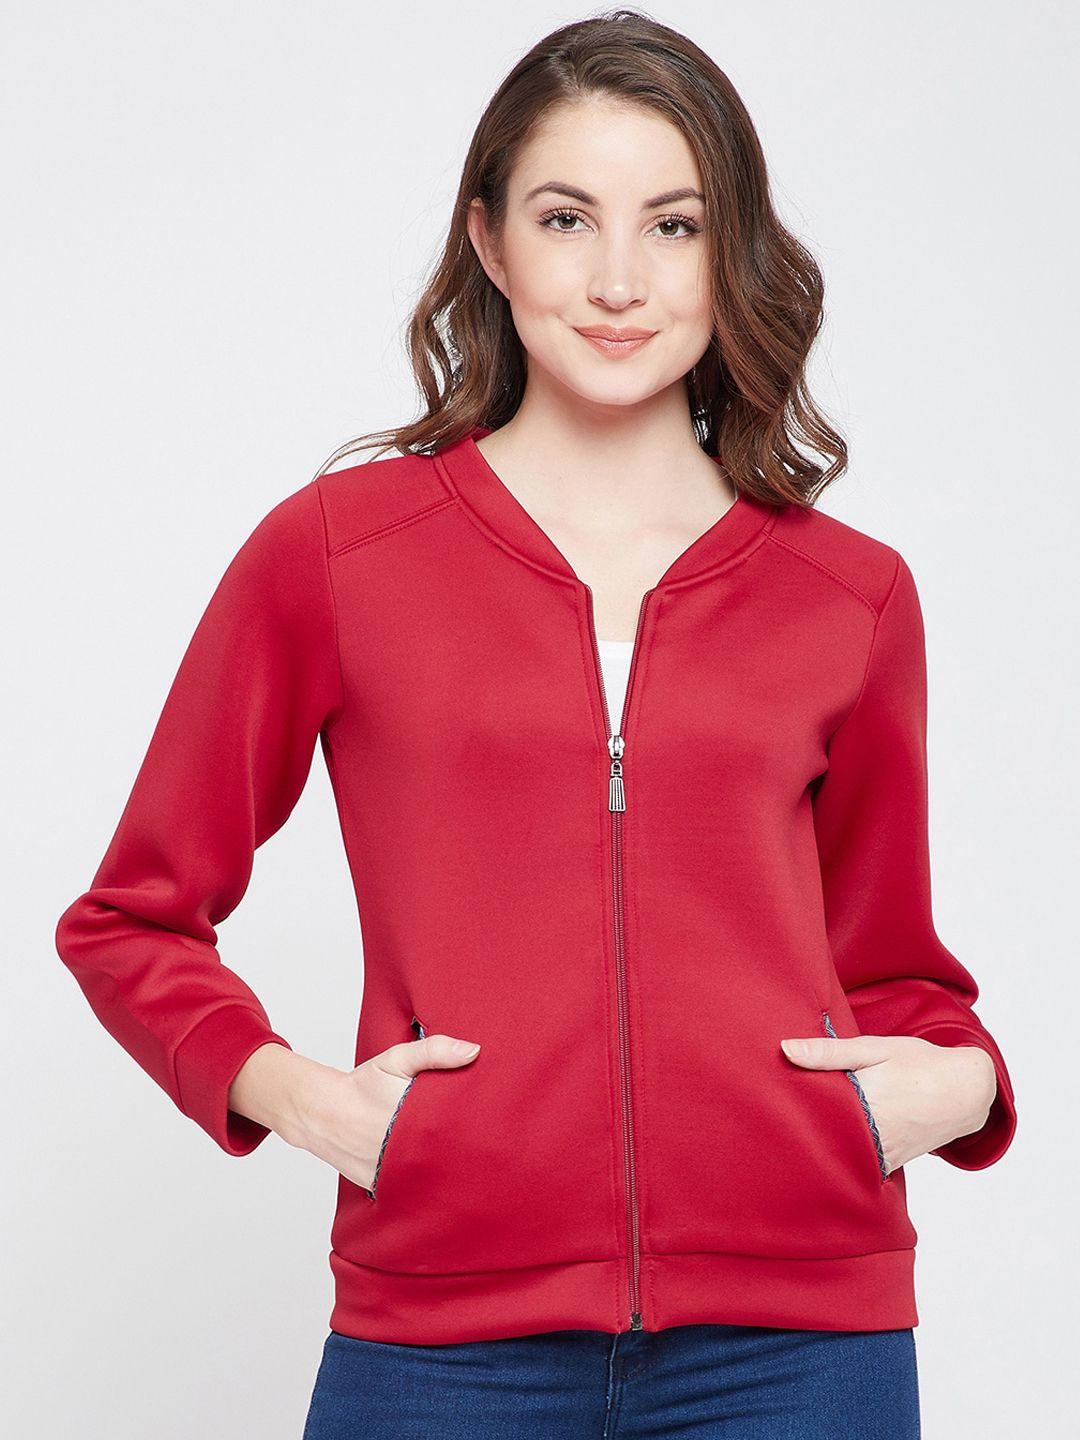 carlton-london-women-red-solid-bomber-jacket